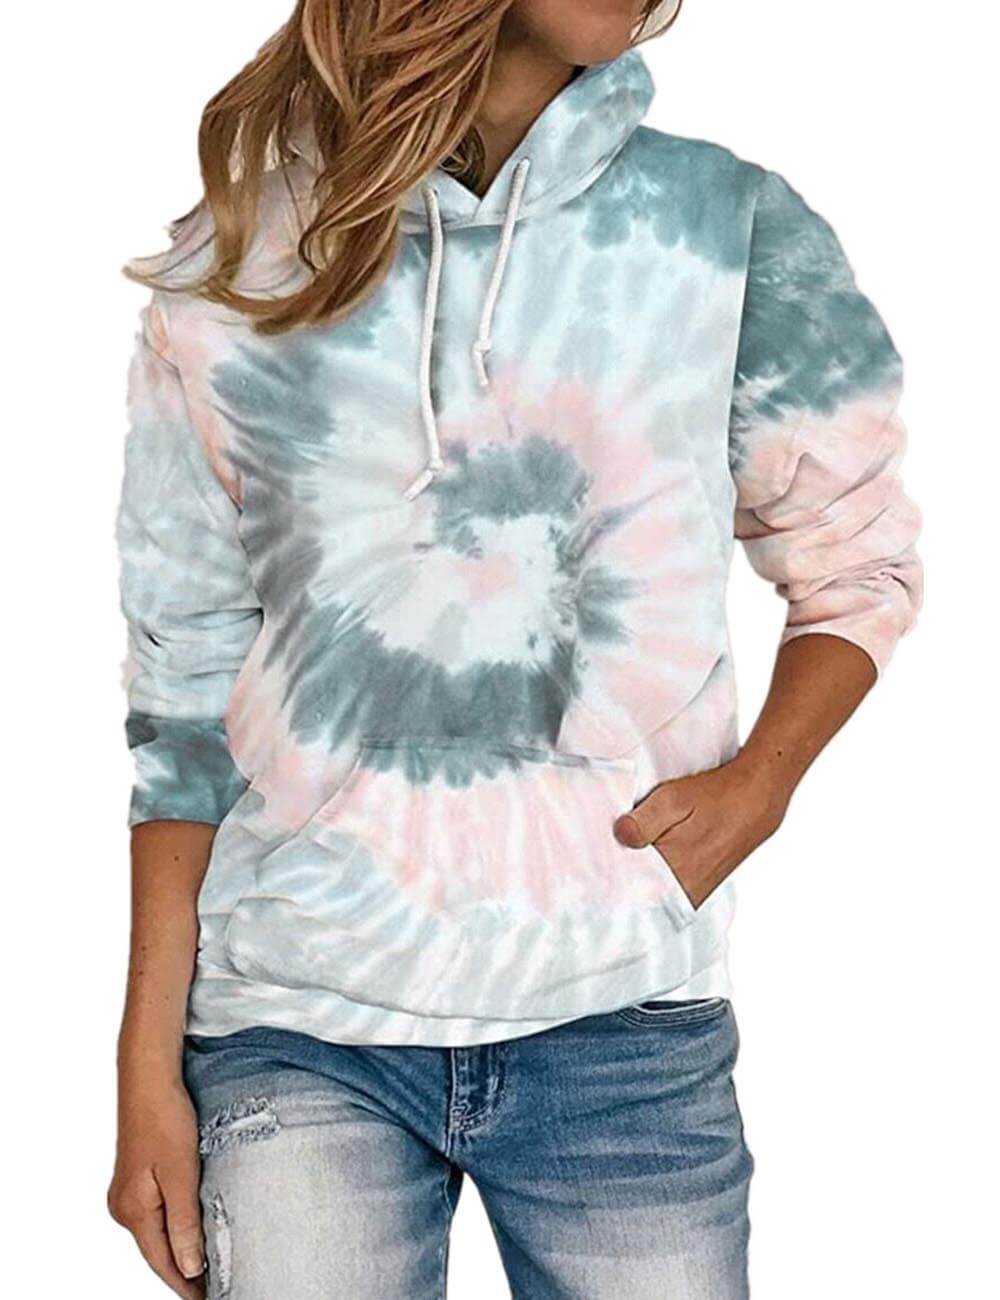  Women‘s Hoodies Tops Color Block Tie Dye Printed Long Sleeve Loose Drawstring Pullover Sweatshirts with Pocket